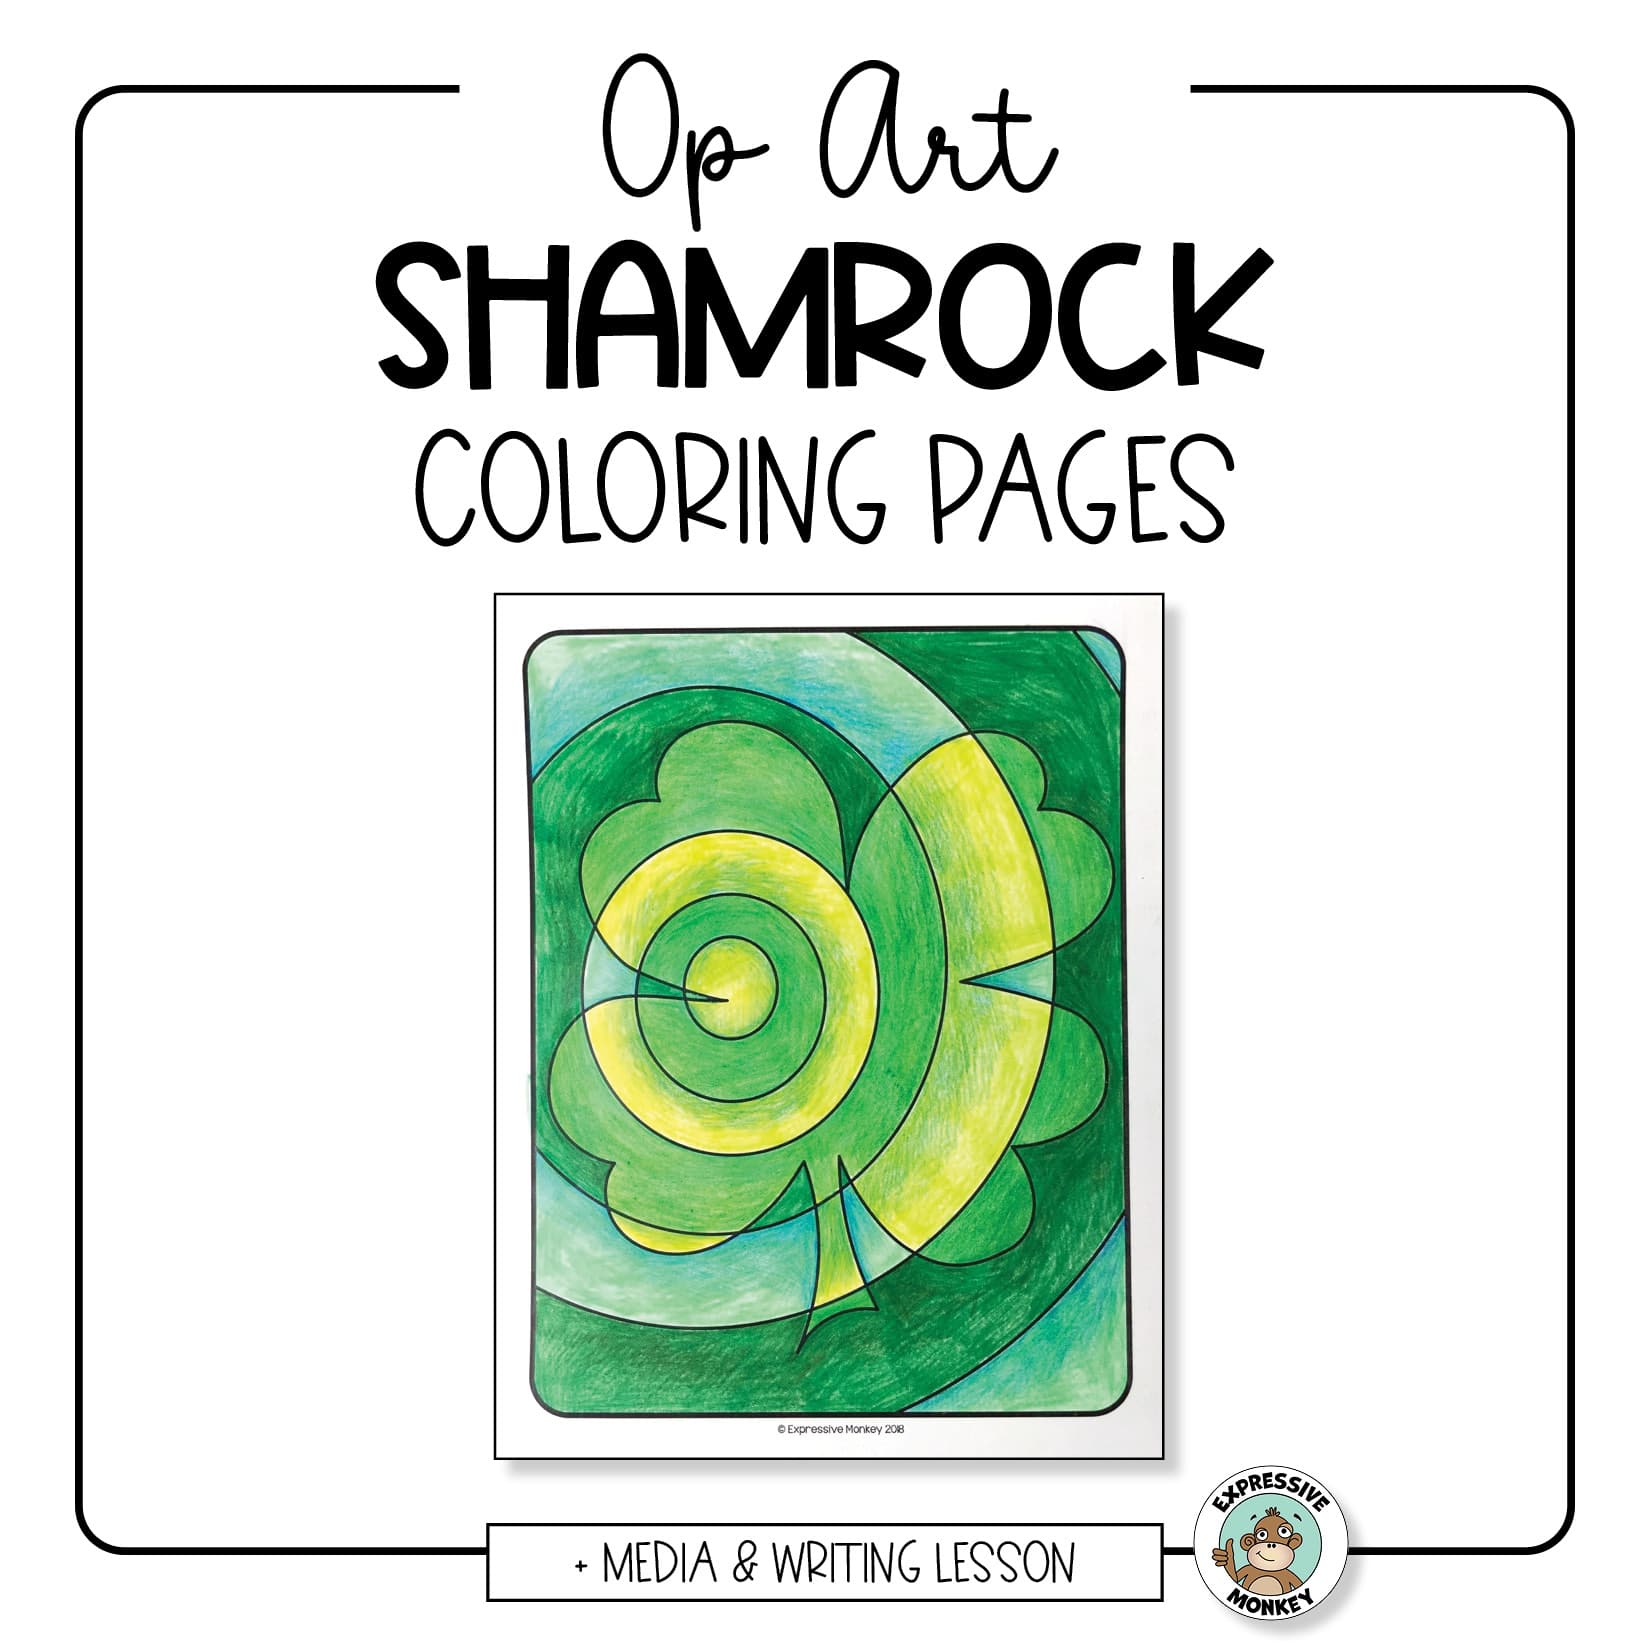 Shamrock coloring pages â expressive monkey